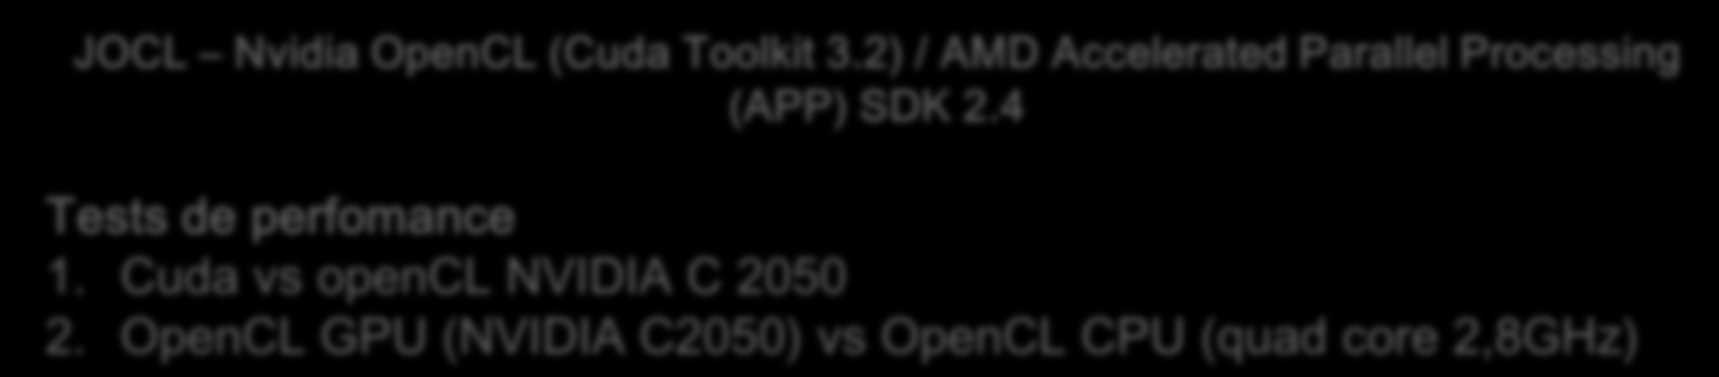 True Cumulated View : Portage vers OpenCL Portage Cuda vers OpenCL de l algorithme optimisé (stagiaire M2 : Victor Barbillon) JOCL Nvidia OpenCL (Cuda Toolkit 3.